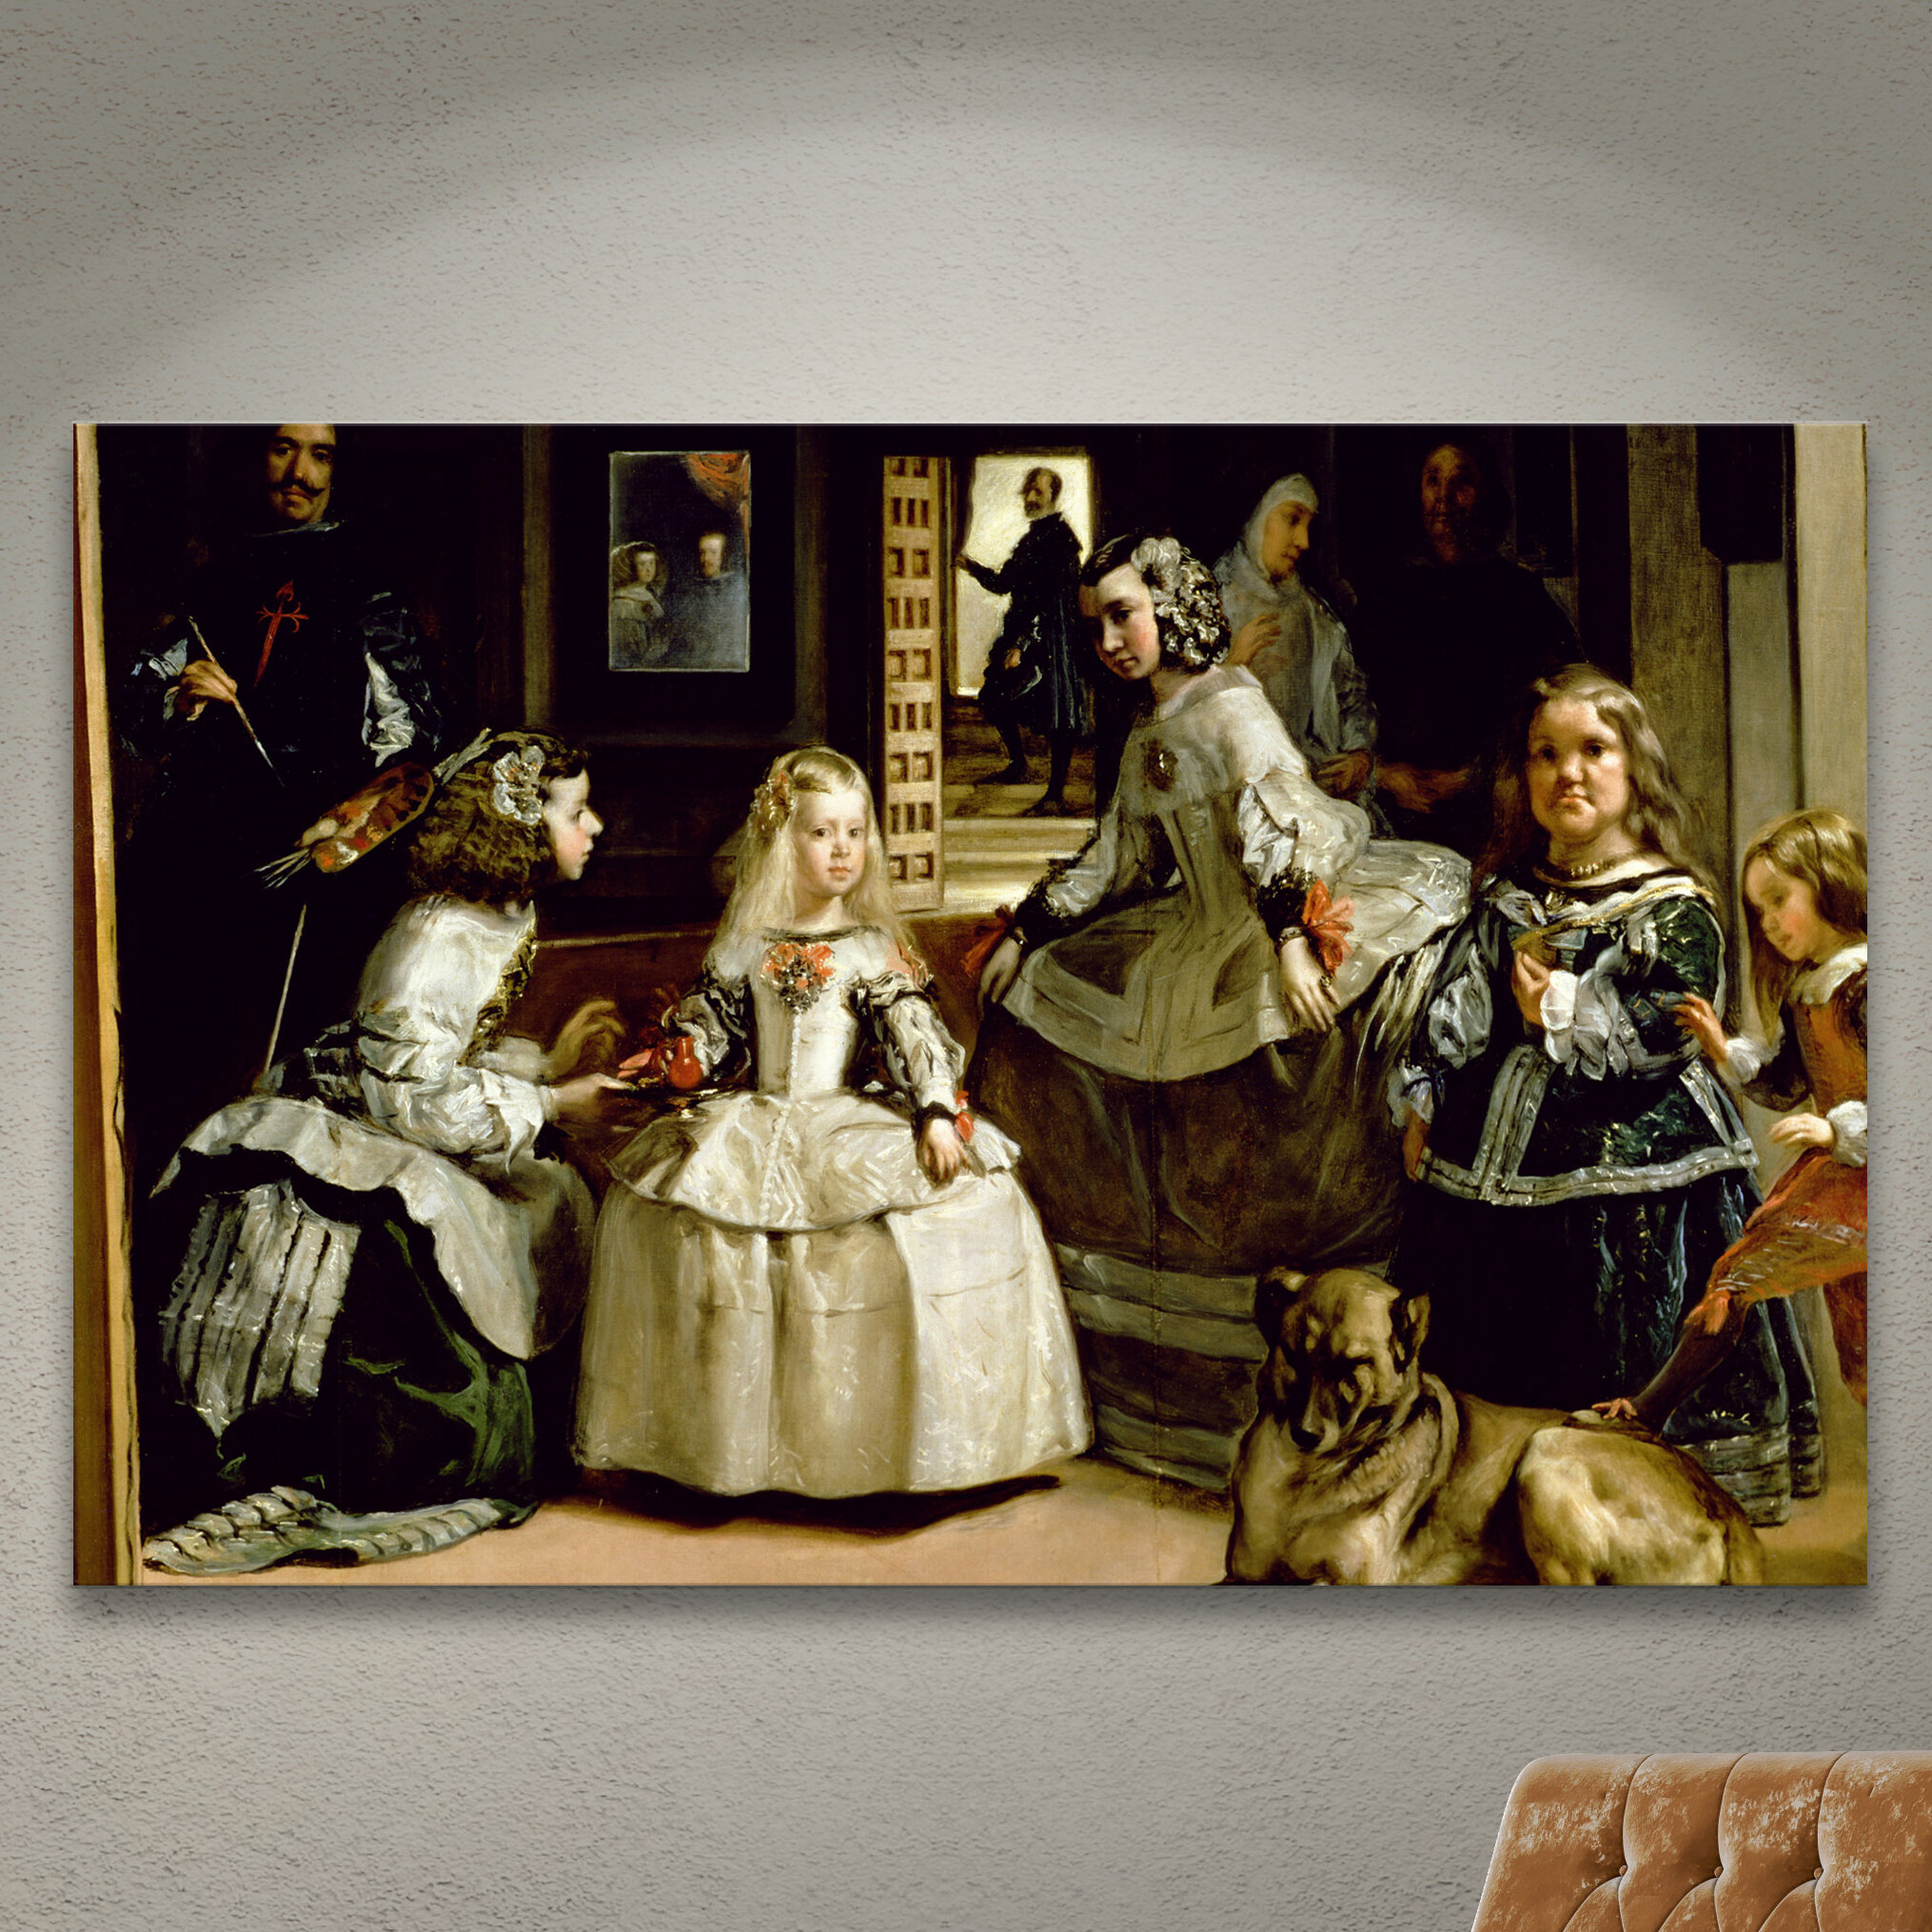 Diego Velázquez's Las Meninas